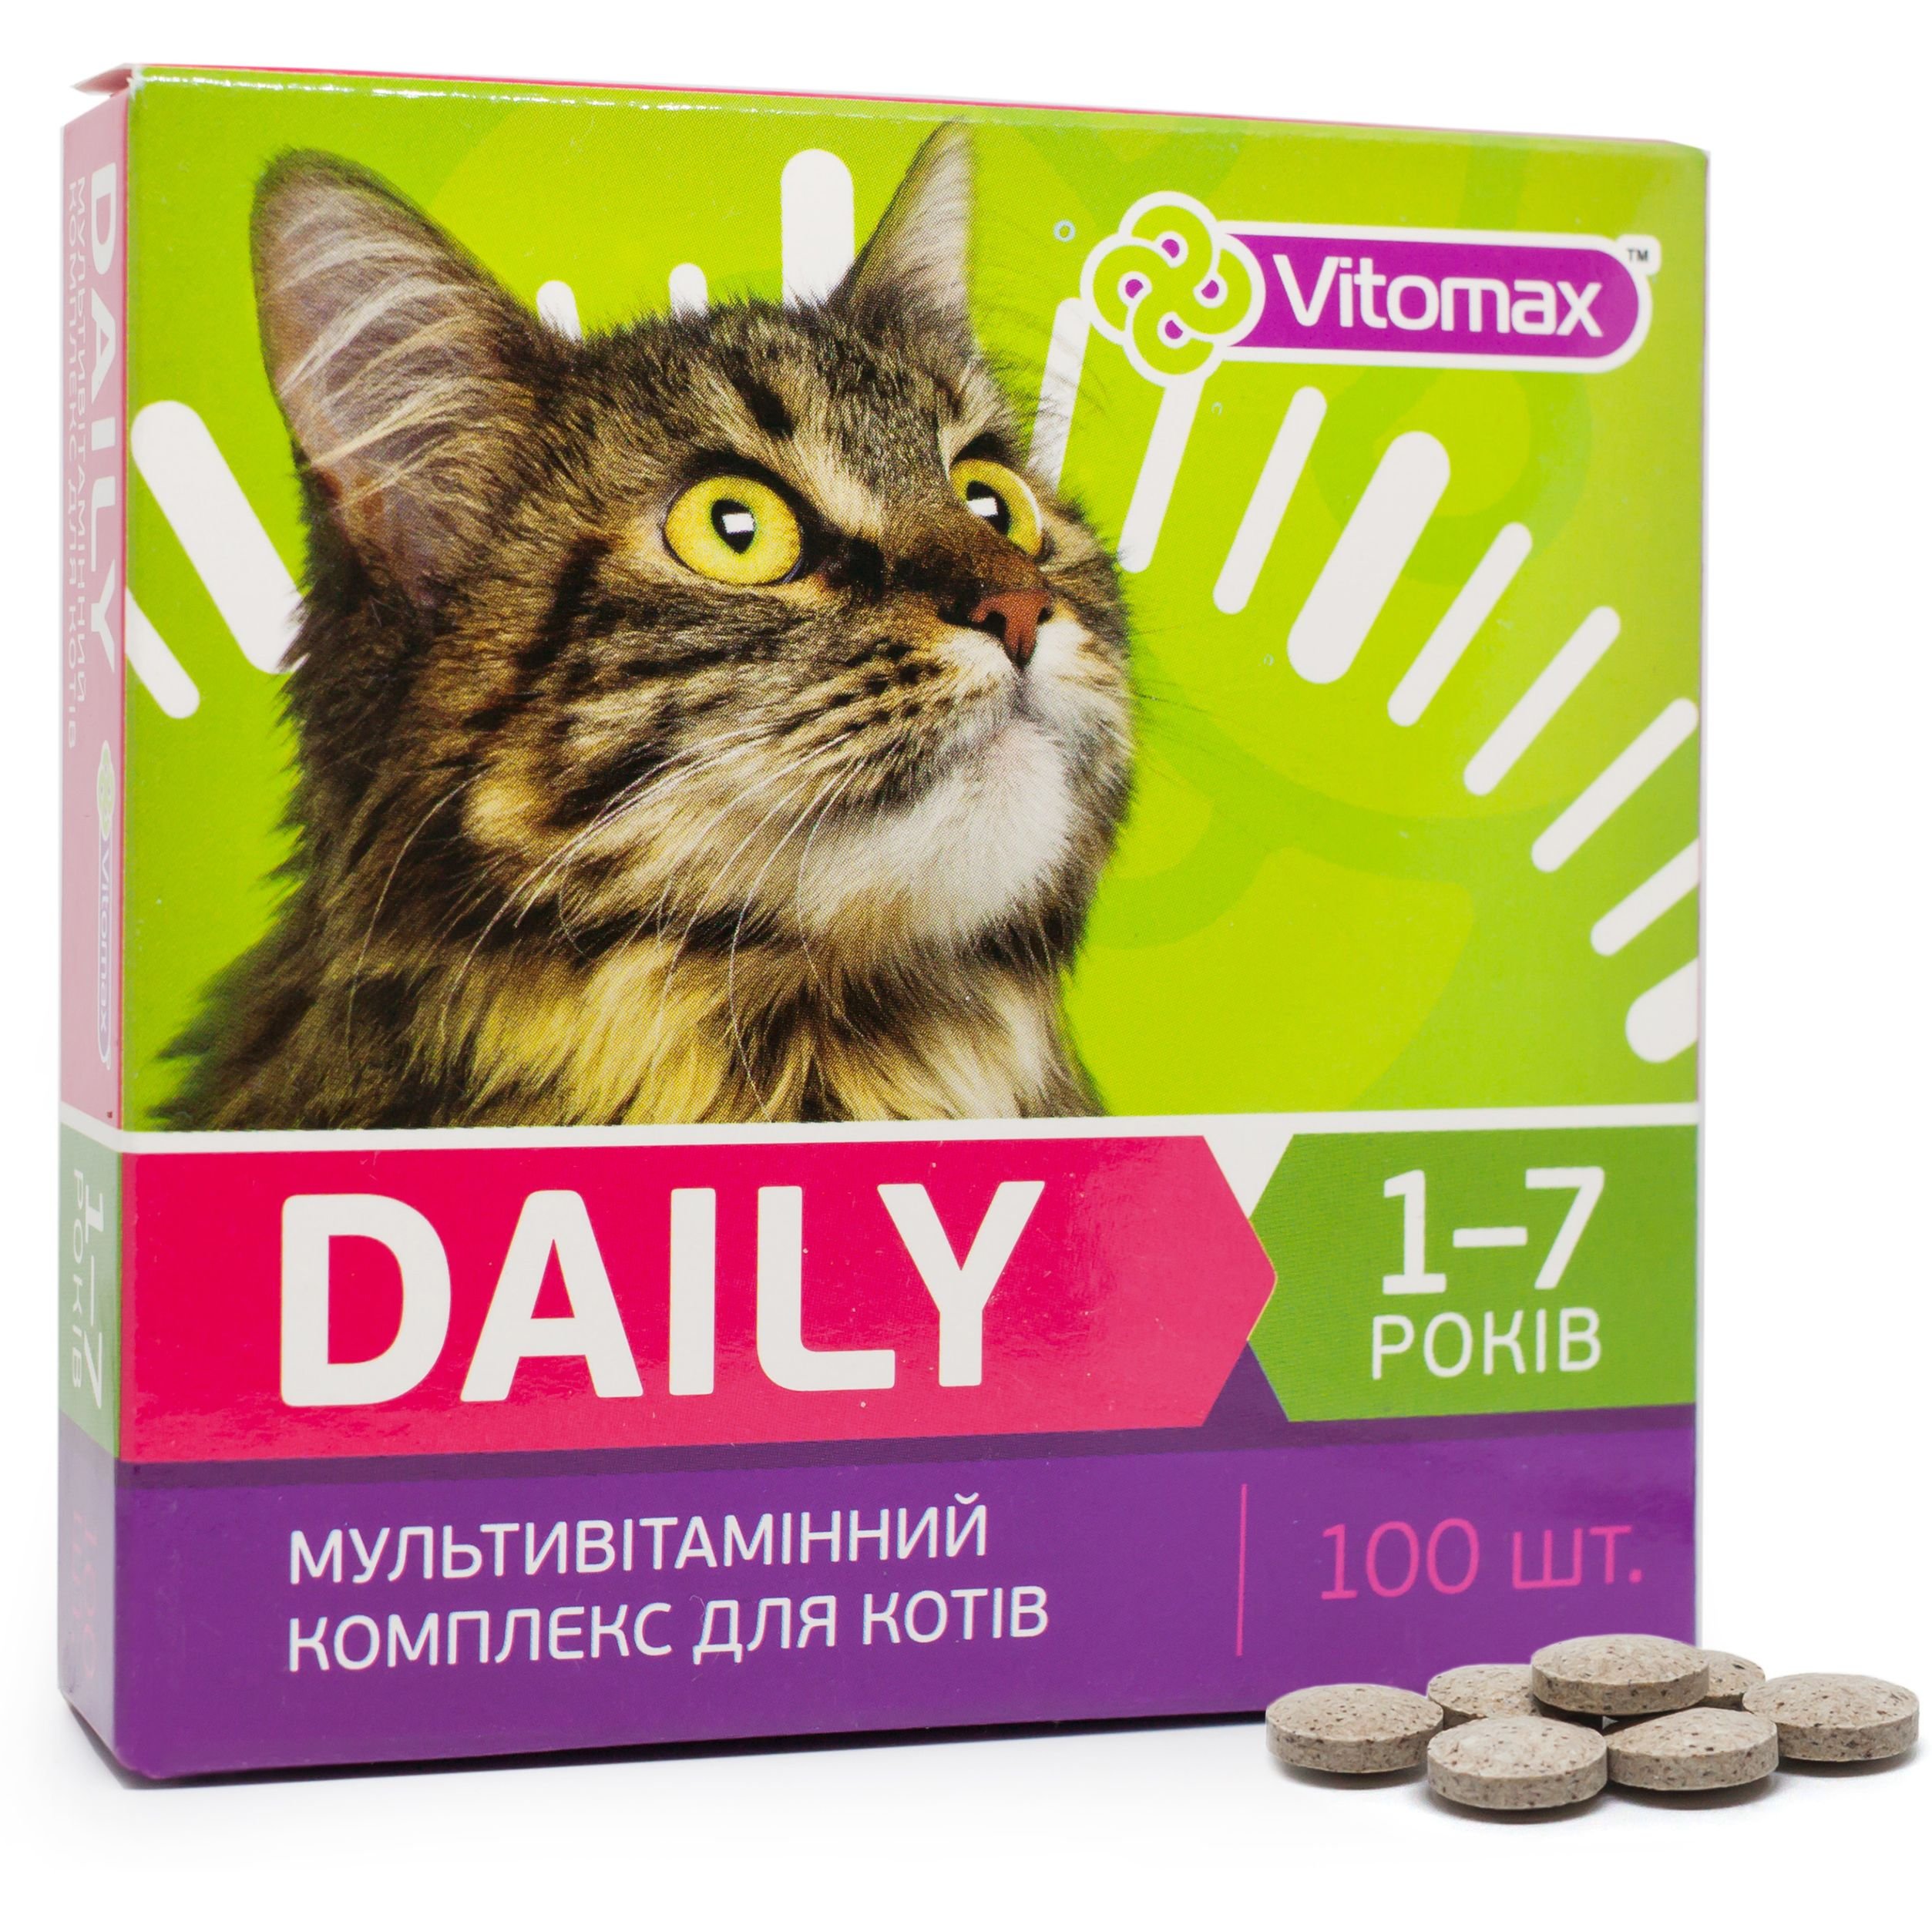 Мультивитаминный комплекс Vitomax Daily для кошек 1-7 лет, 100 таблеток - фото 2